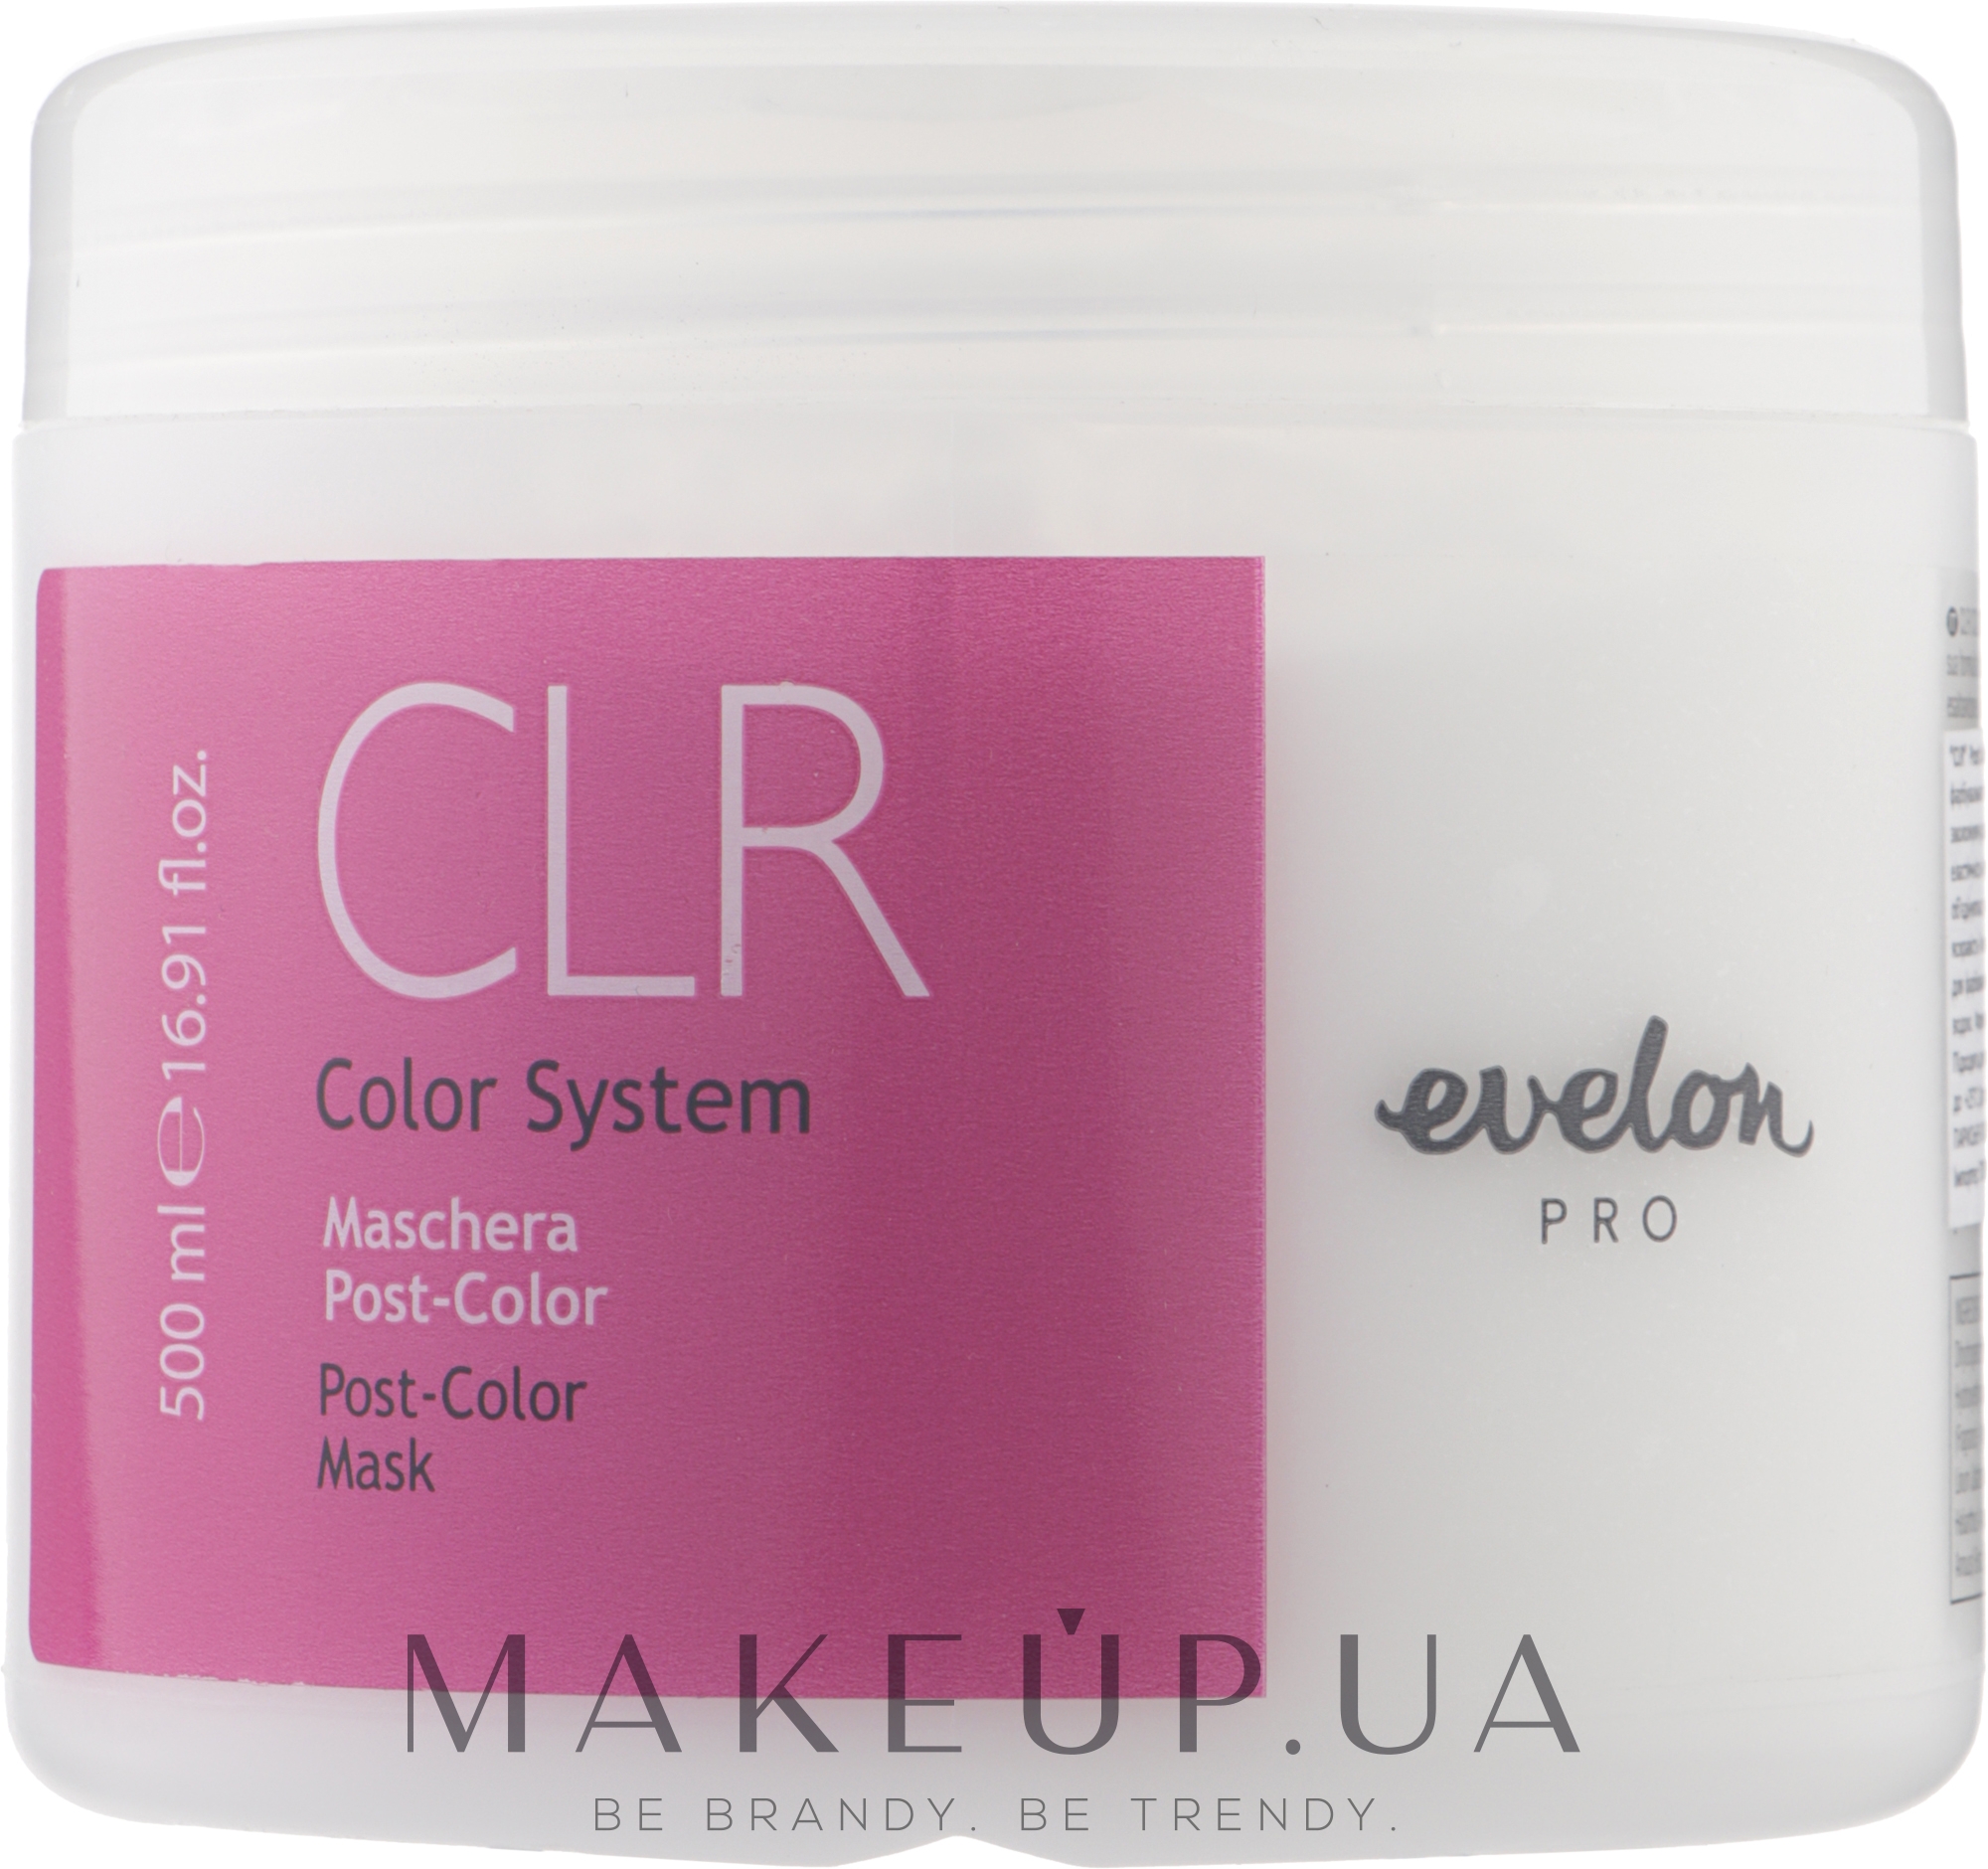 Маска для фарбованого волосся - Parisienne Evelon Pro Color System Post Color Mask — фото 500ml